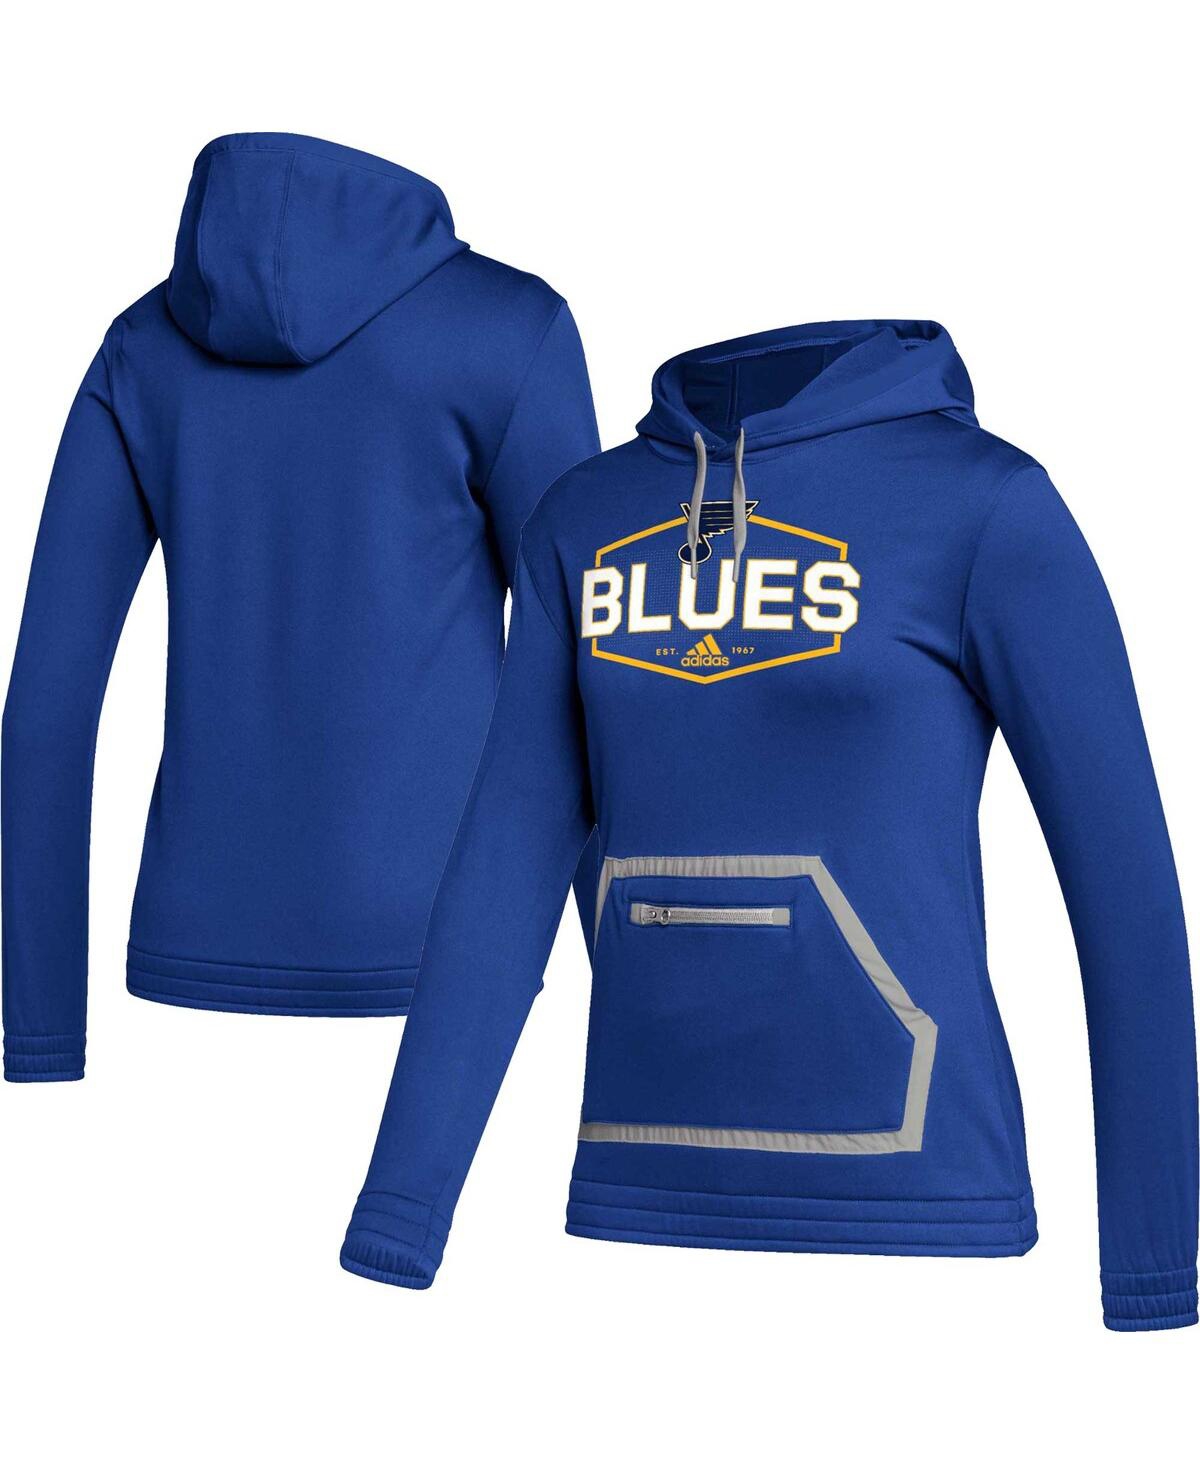 Shop Adidas Originals Women's Adidas Blue St. Louis Blues Team Pullover Hoodie